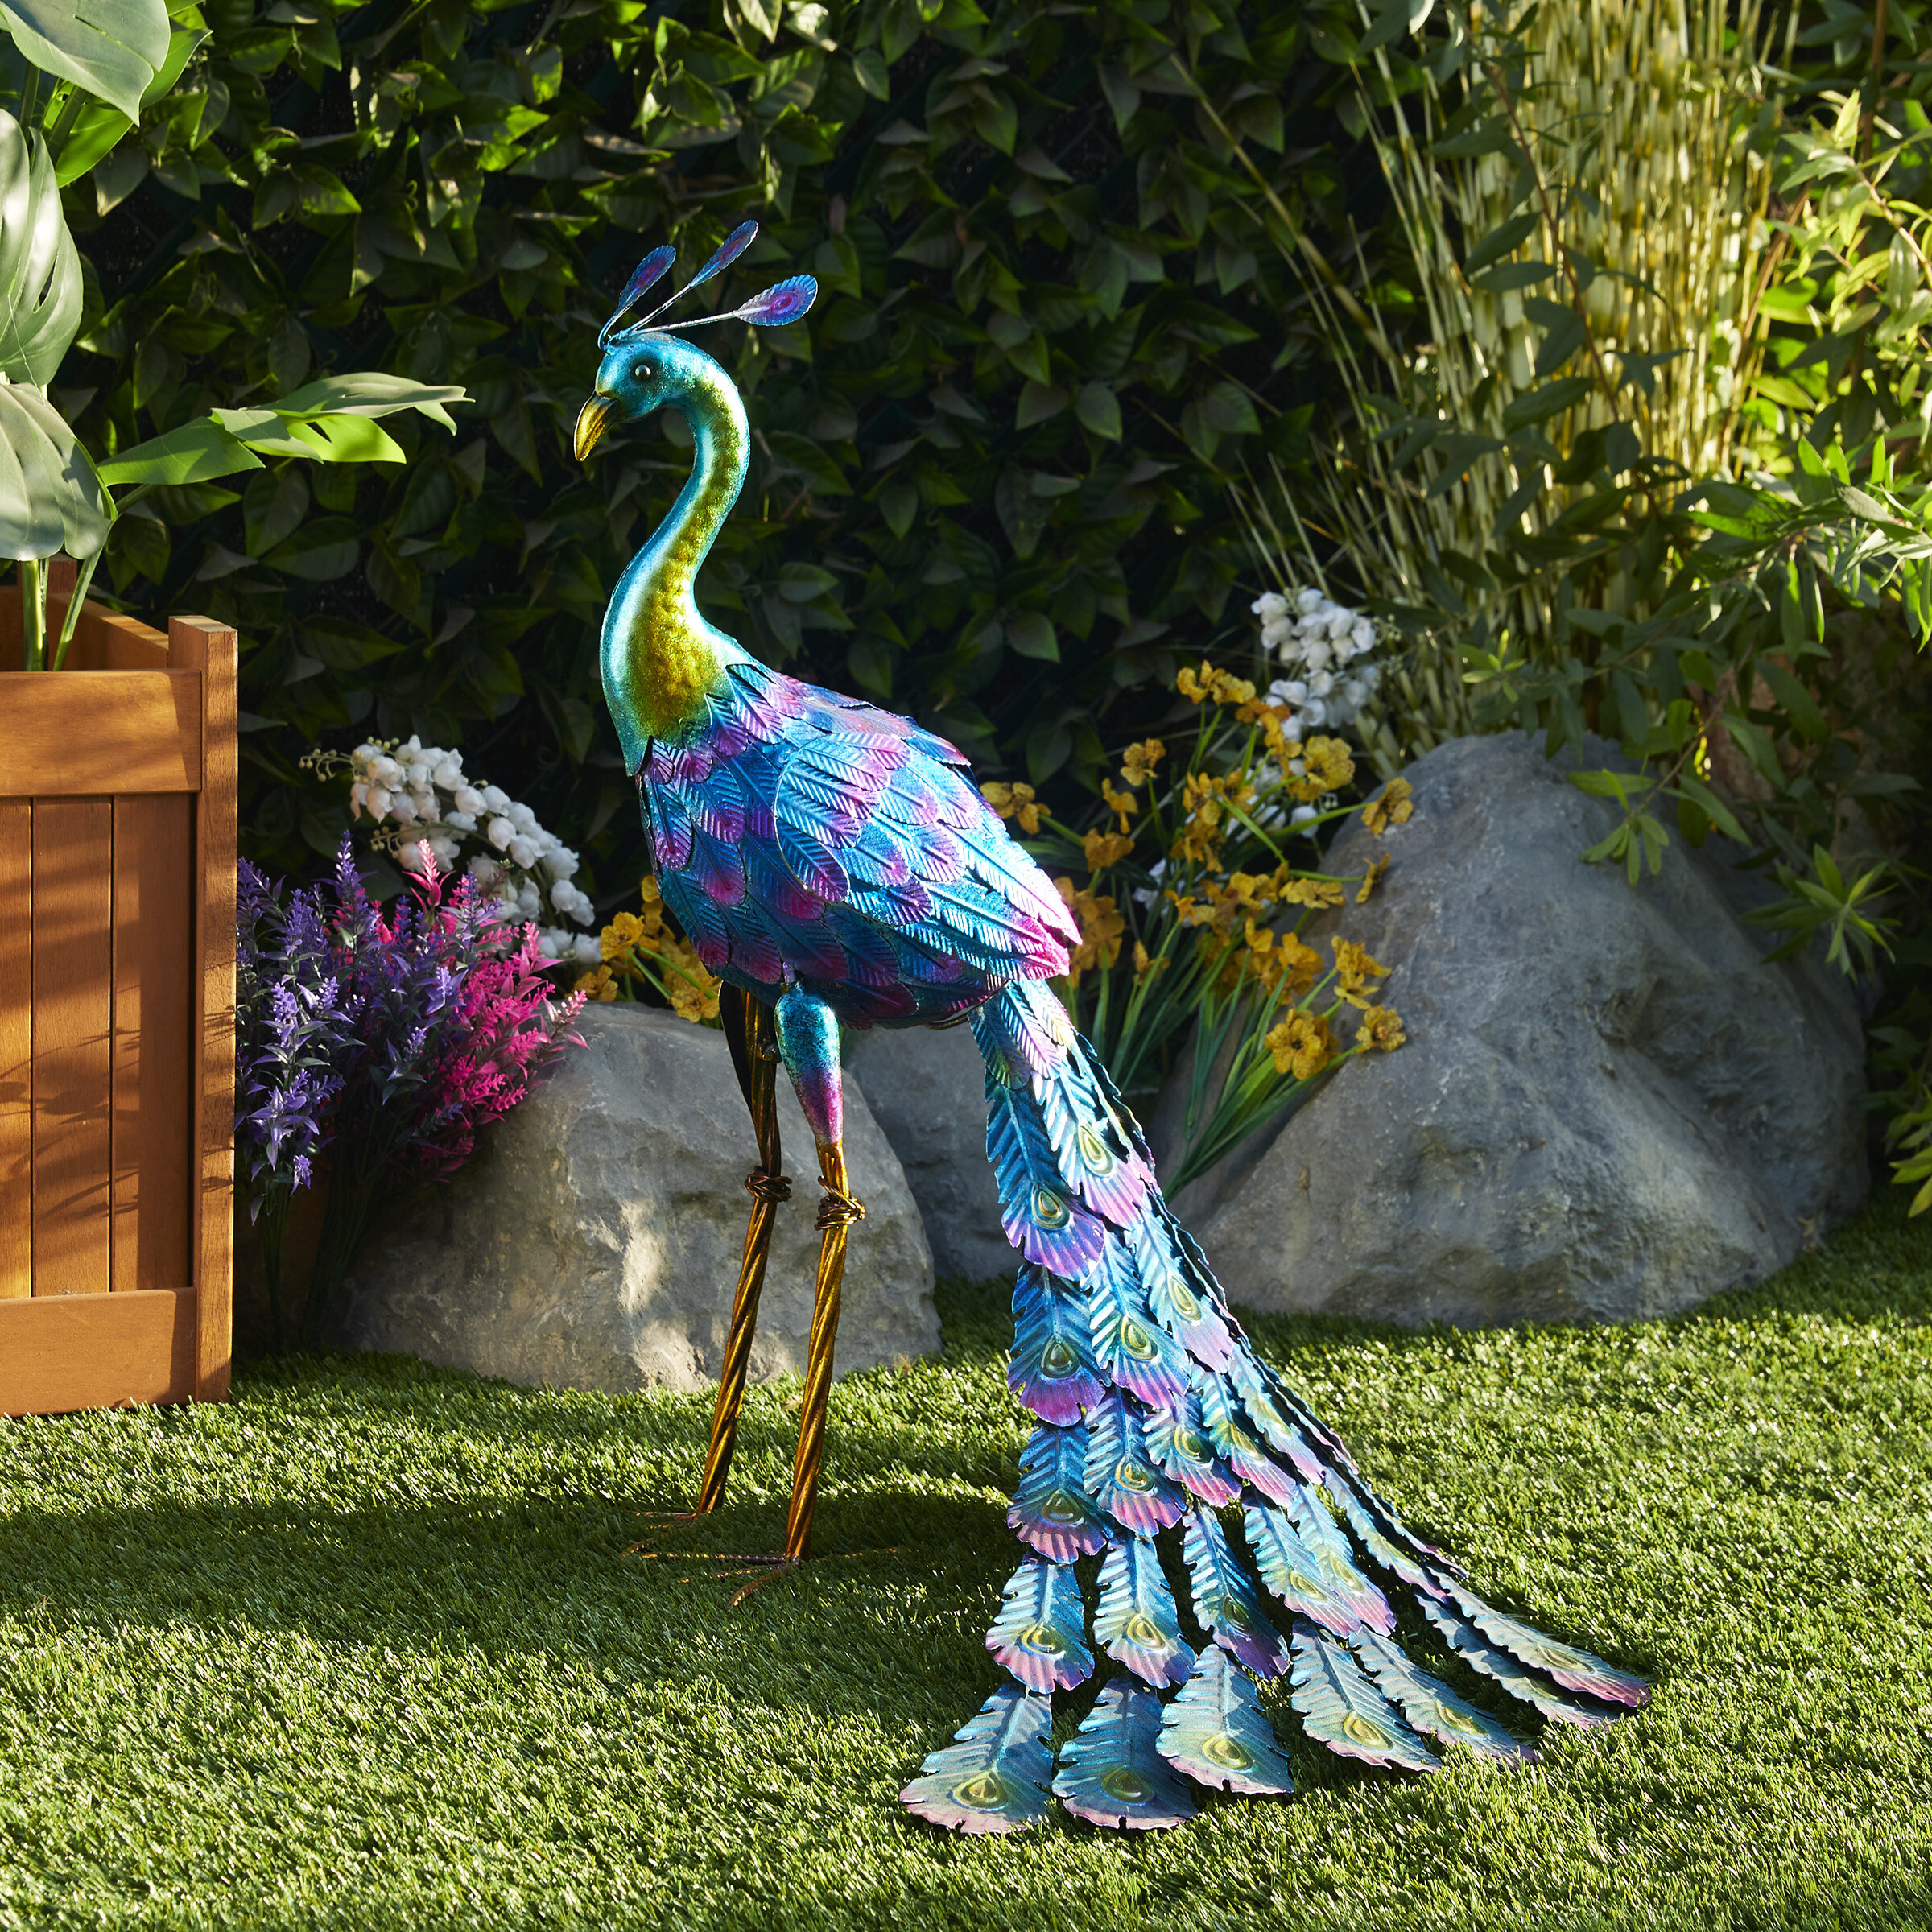 Regal Art & Gift 19-inch Peacock Wind Spinner